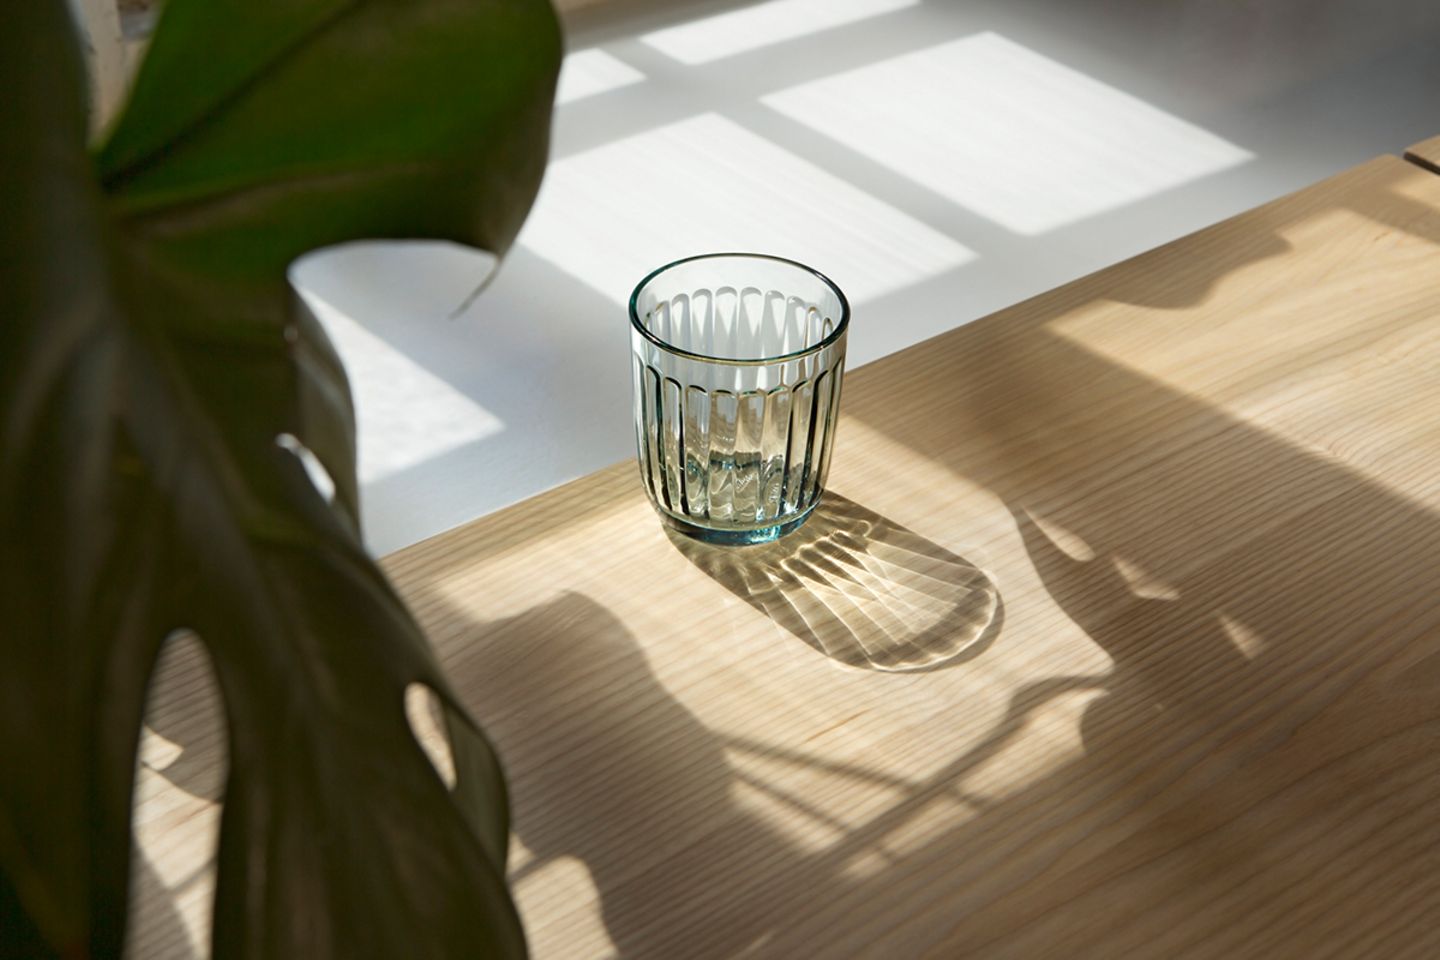 Trinkglas "Raami" von Iittala aus Glasabfällen